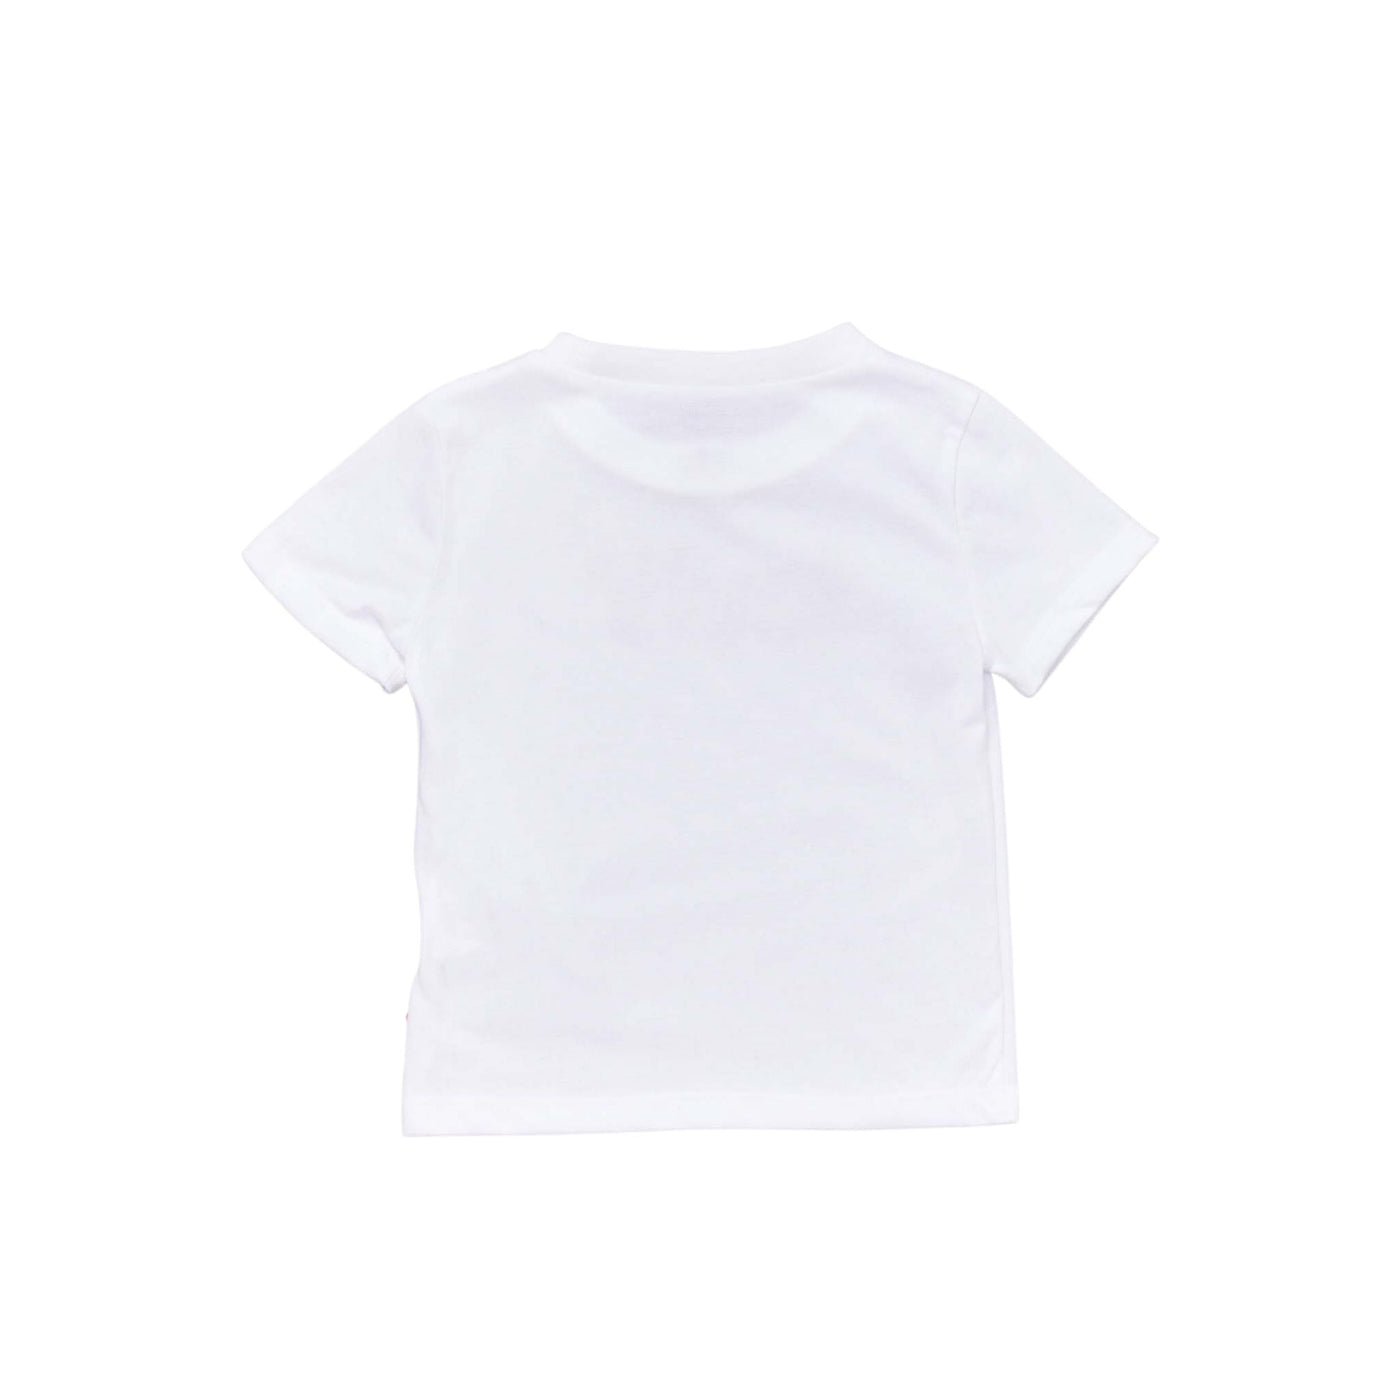 T-shirt bianca tinta unita. Parte posteriore. 